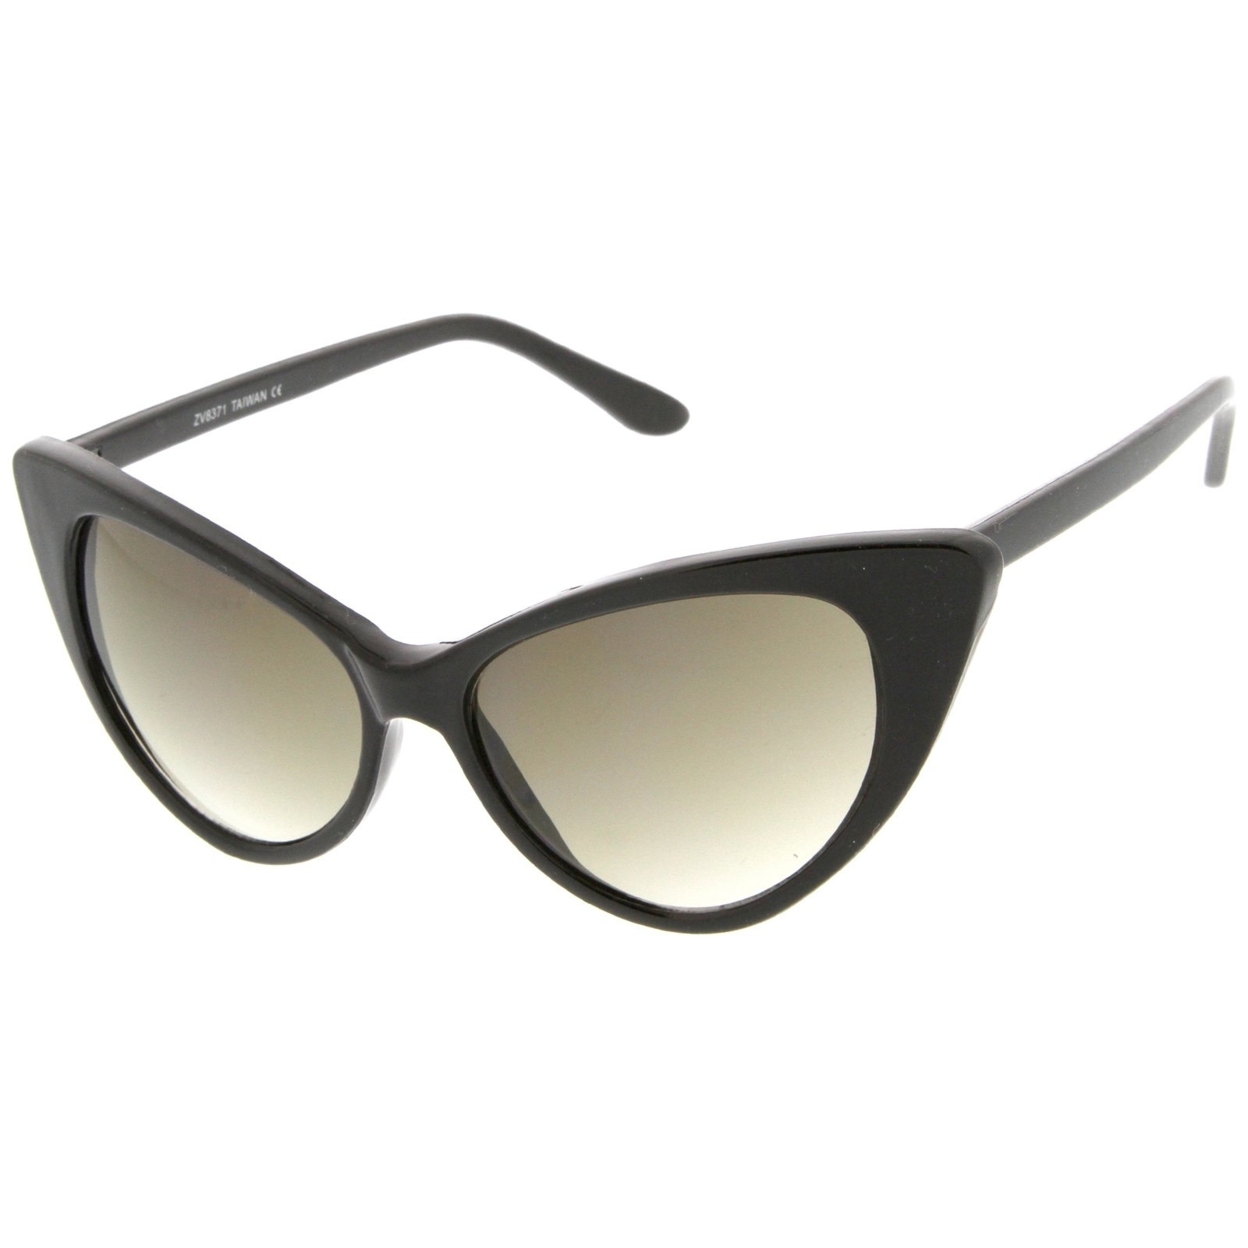 Women's Retro Oversized High Point Cat Eye Sunglasses 55mm - Black / Smoke Gradient